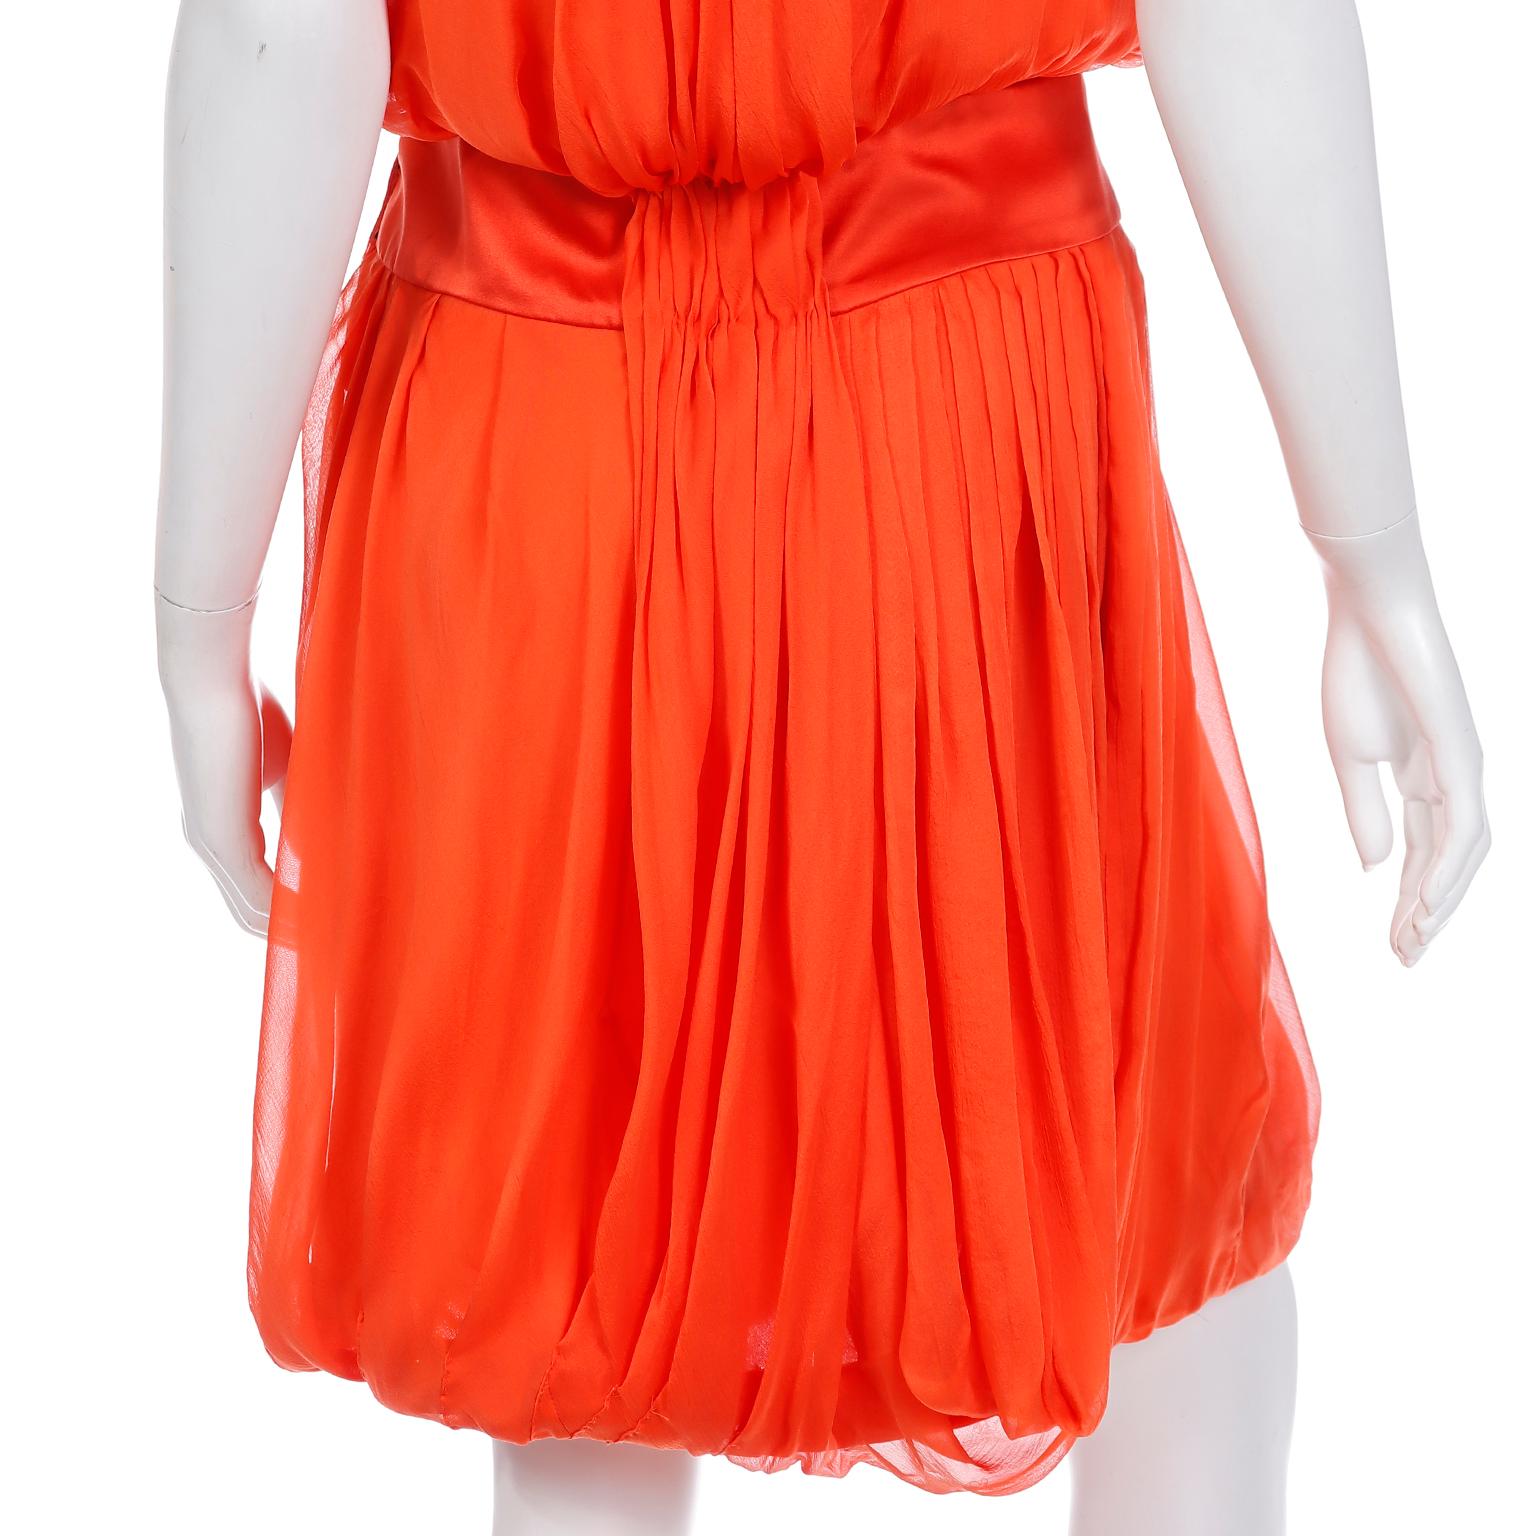 Vintage Fine Silk Chiffon Orange Sleeveless Dress With Satin Waistband For Sale 7